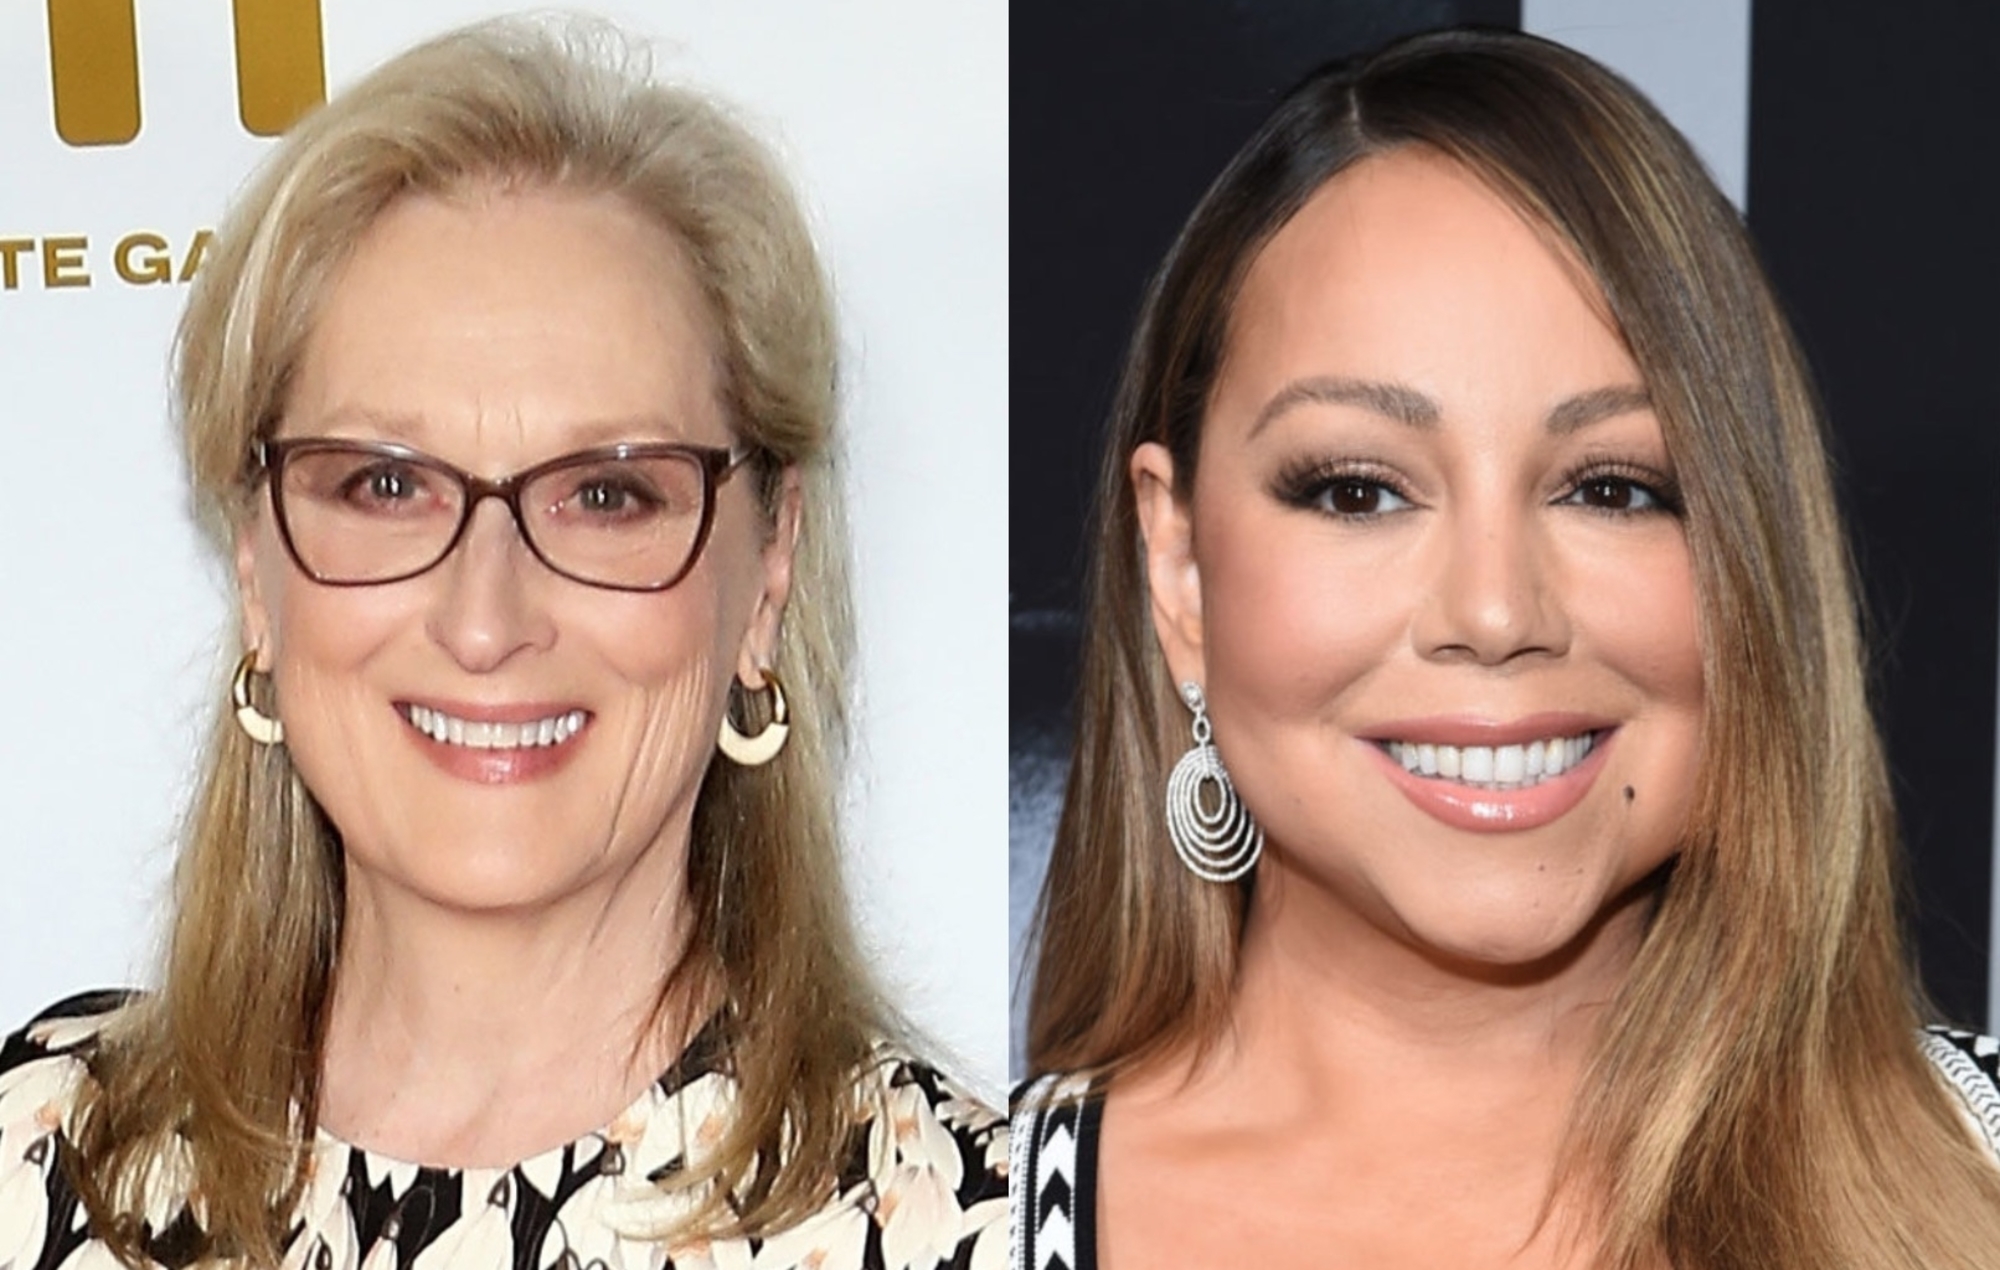 Watch Meryl Streep and Mariah Carey guest star in 'Focus Focus' Reunion

